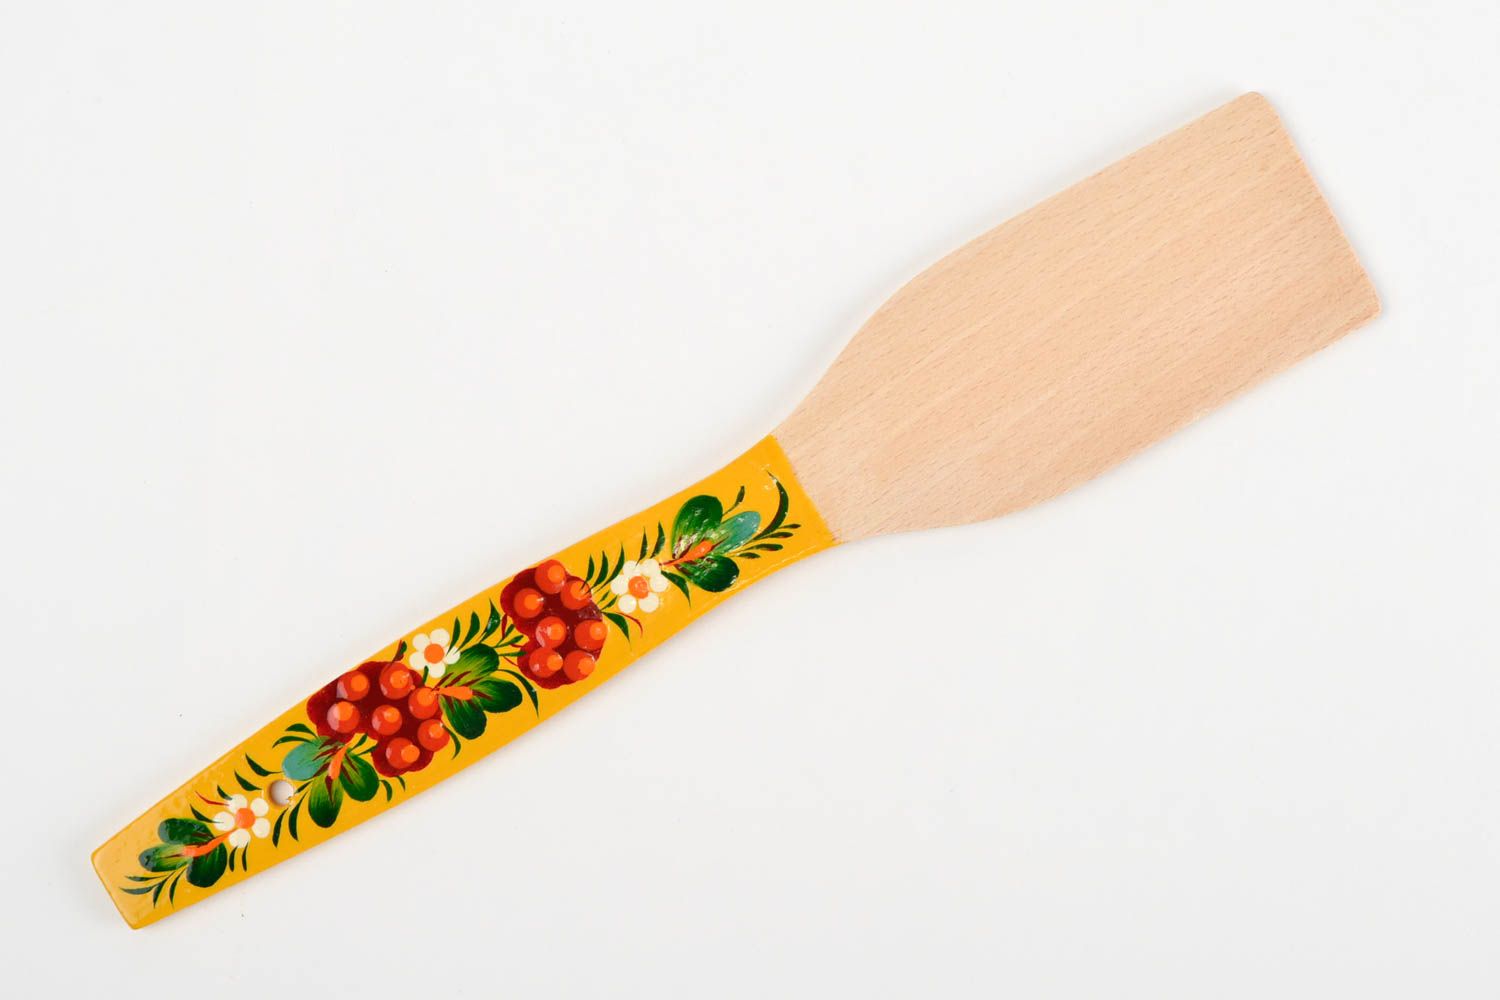 Handmade spatula wooden spatula for kitchen decor ideas unusual gift for women photo 3